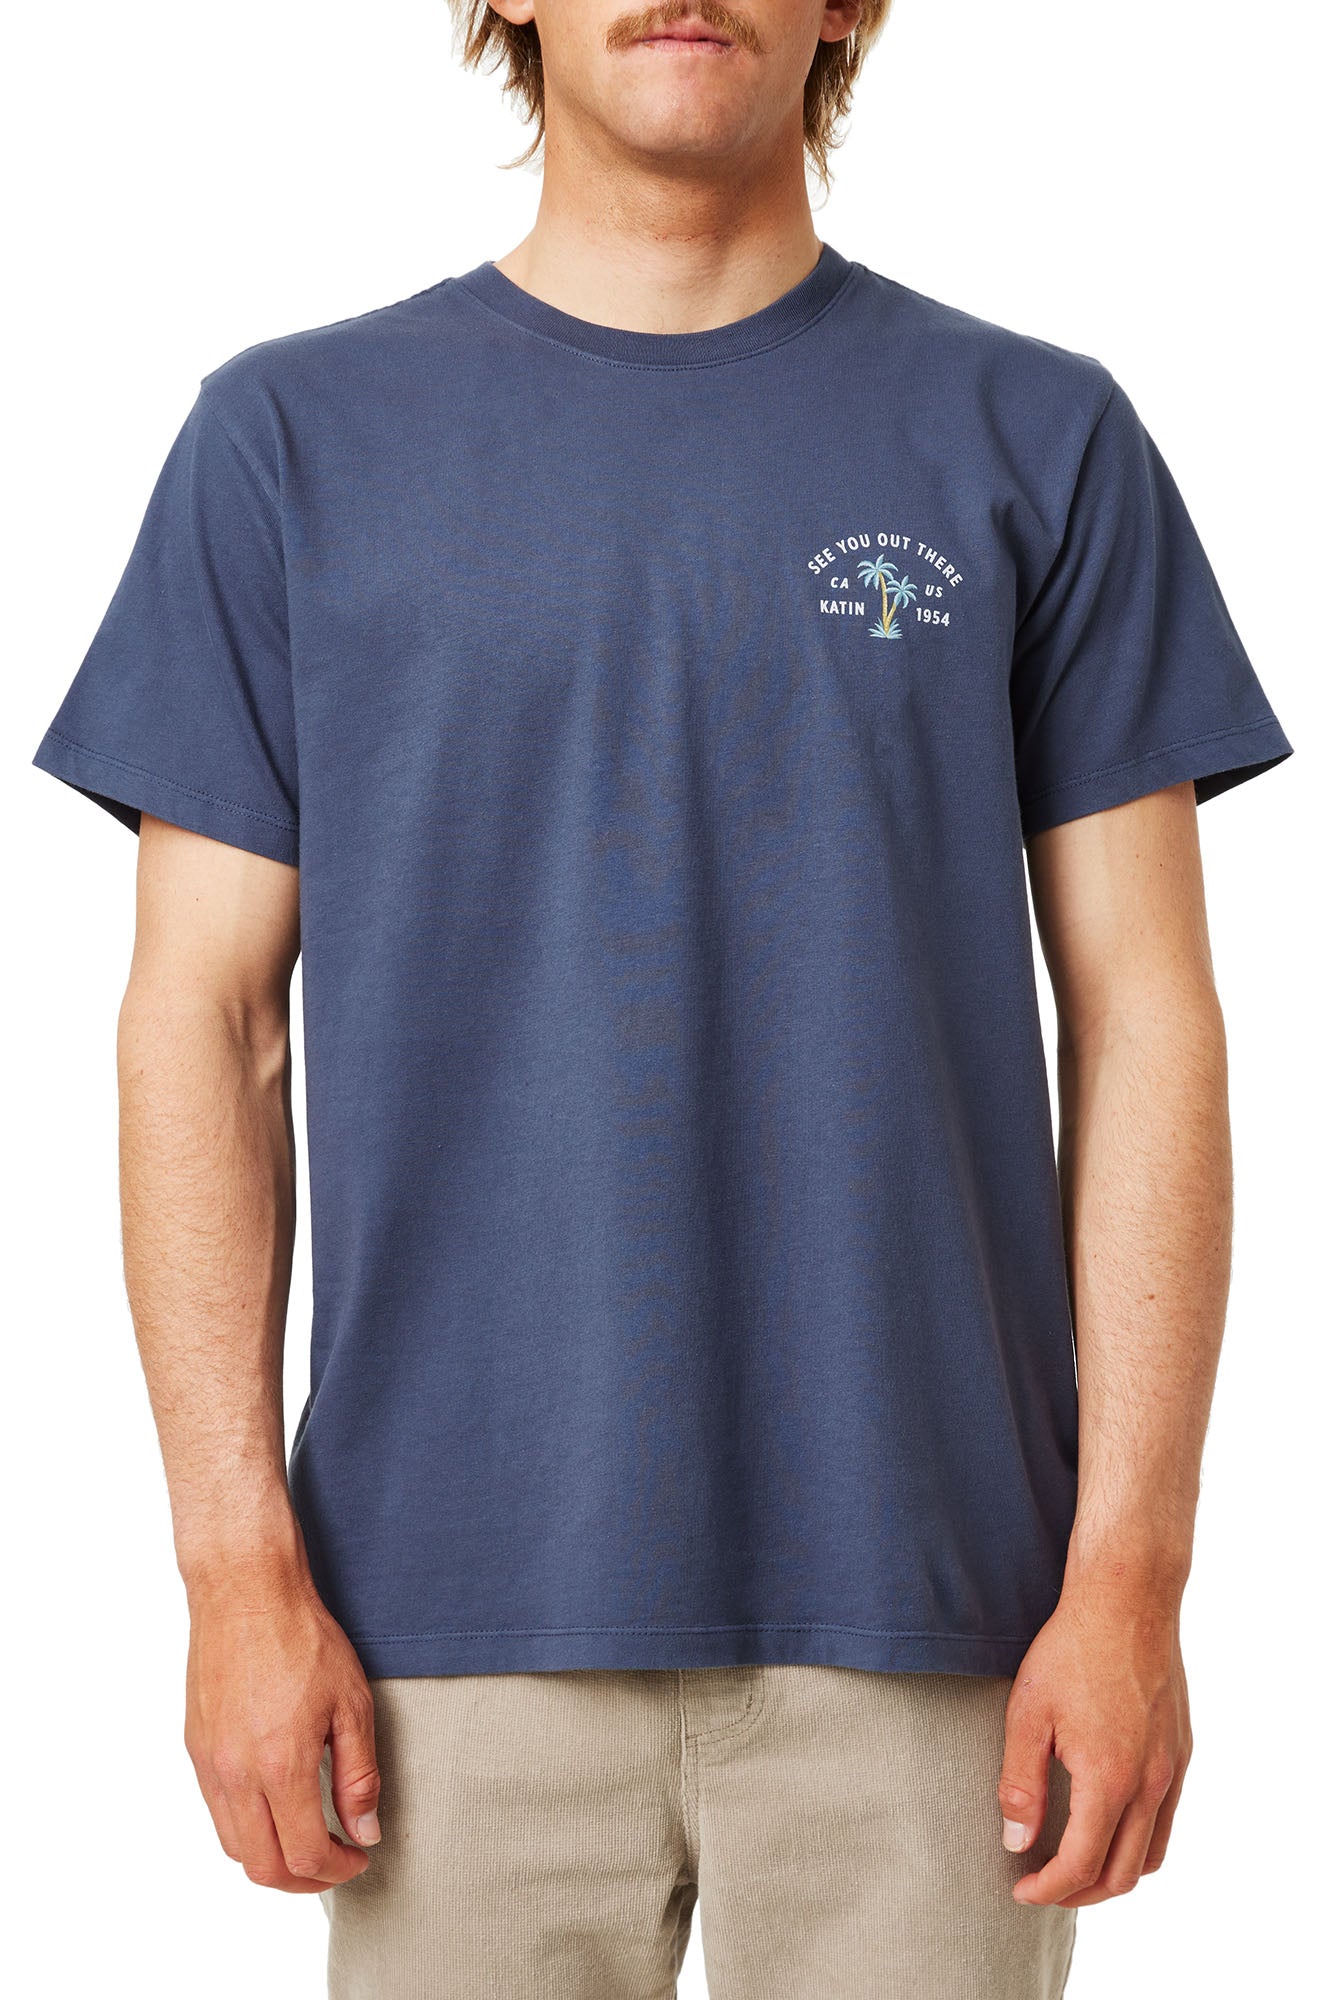 Tee-shirt Bermuda Katin - BALTIC BLUE